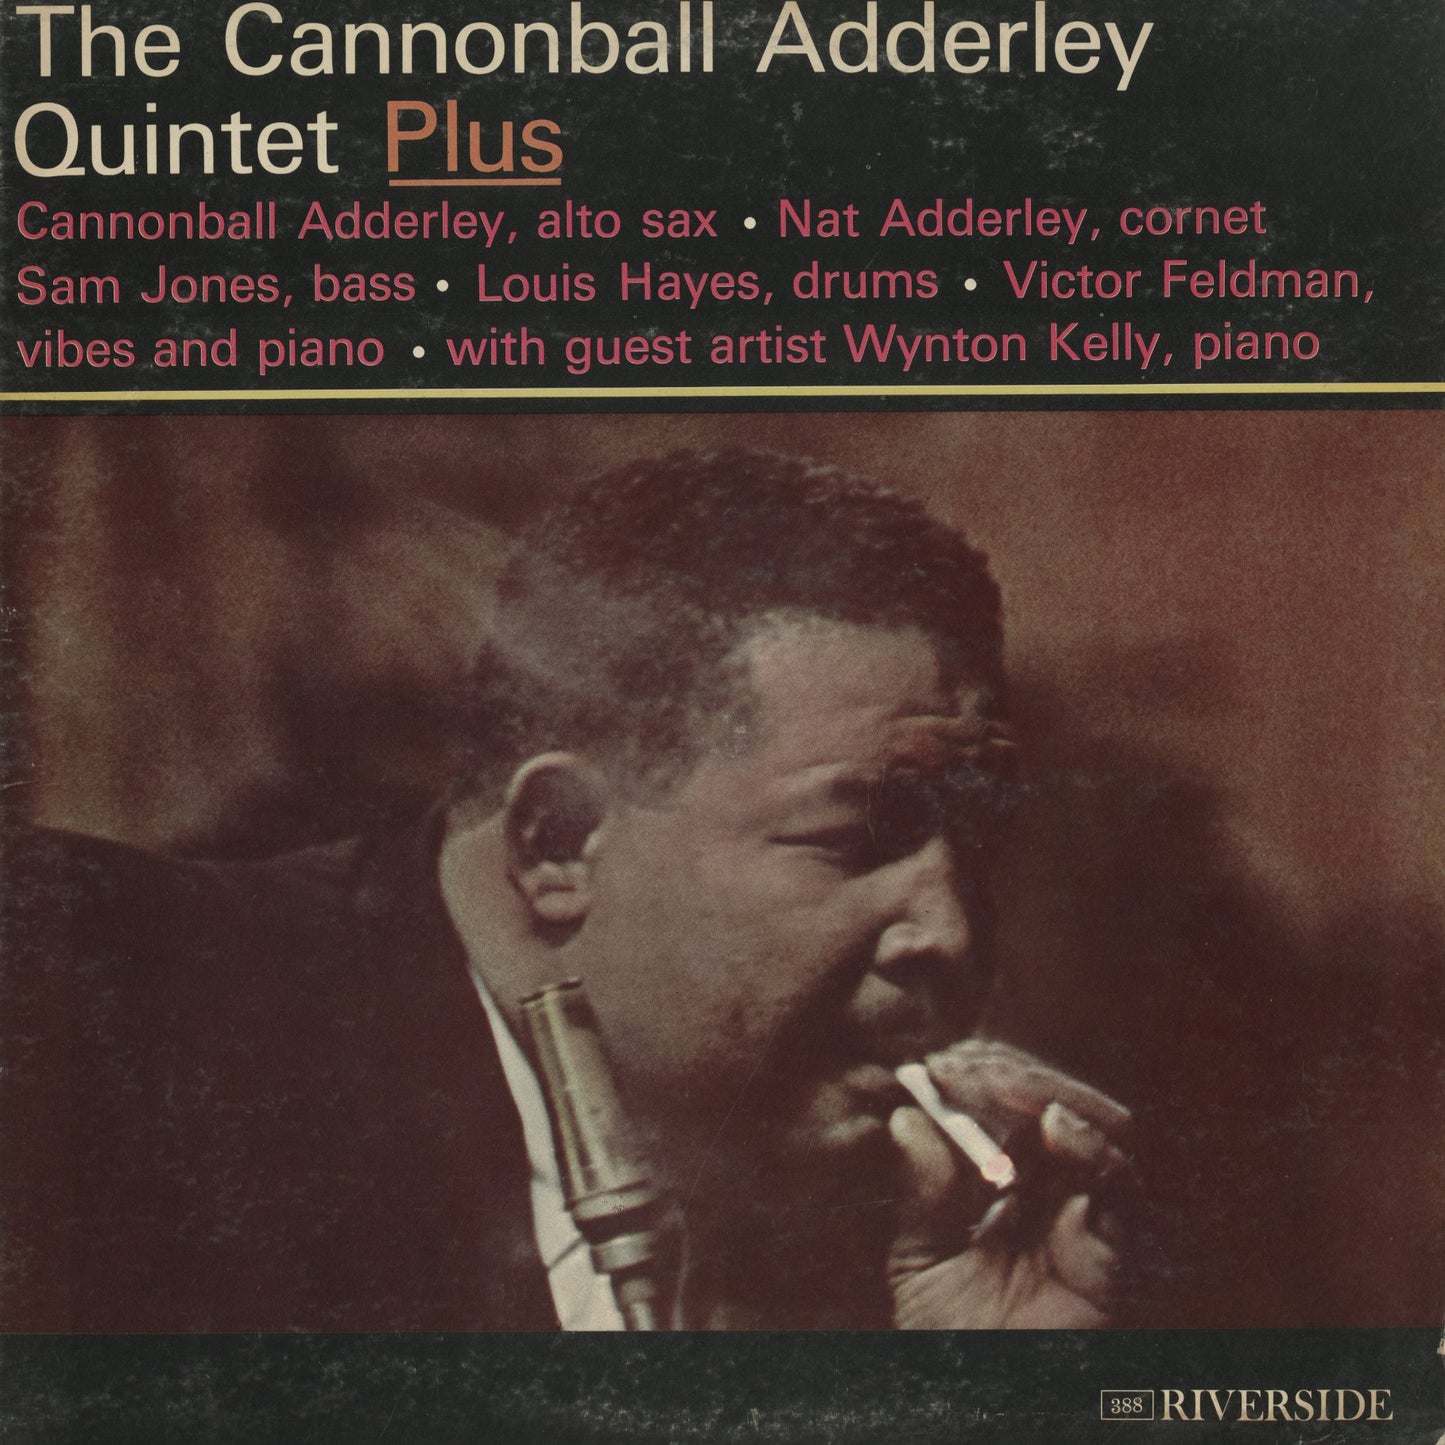 Cannonball Adderley / キャノンボール・アダレイ / Cannonball Adderley Quintet Plus (RLP 388)